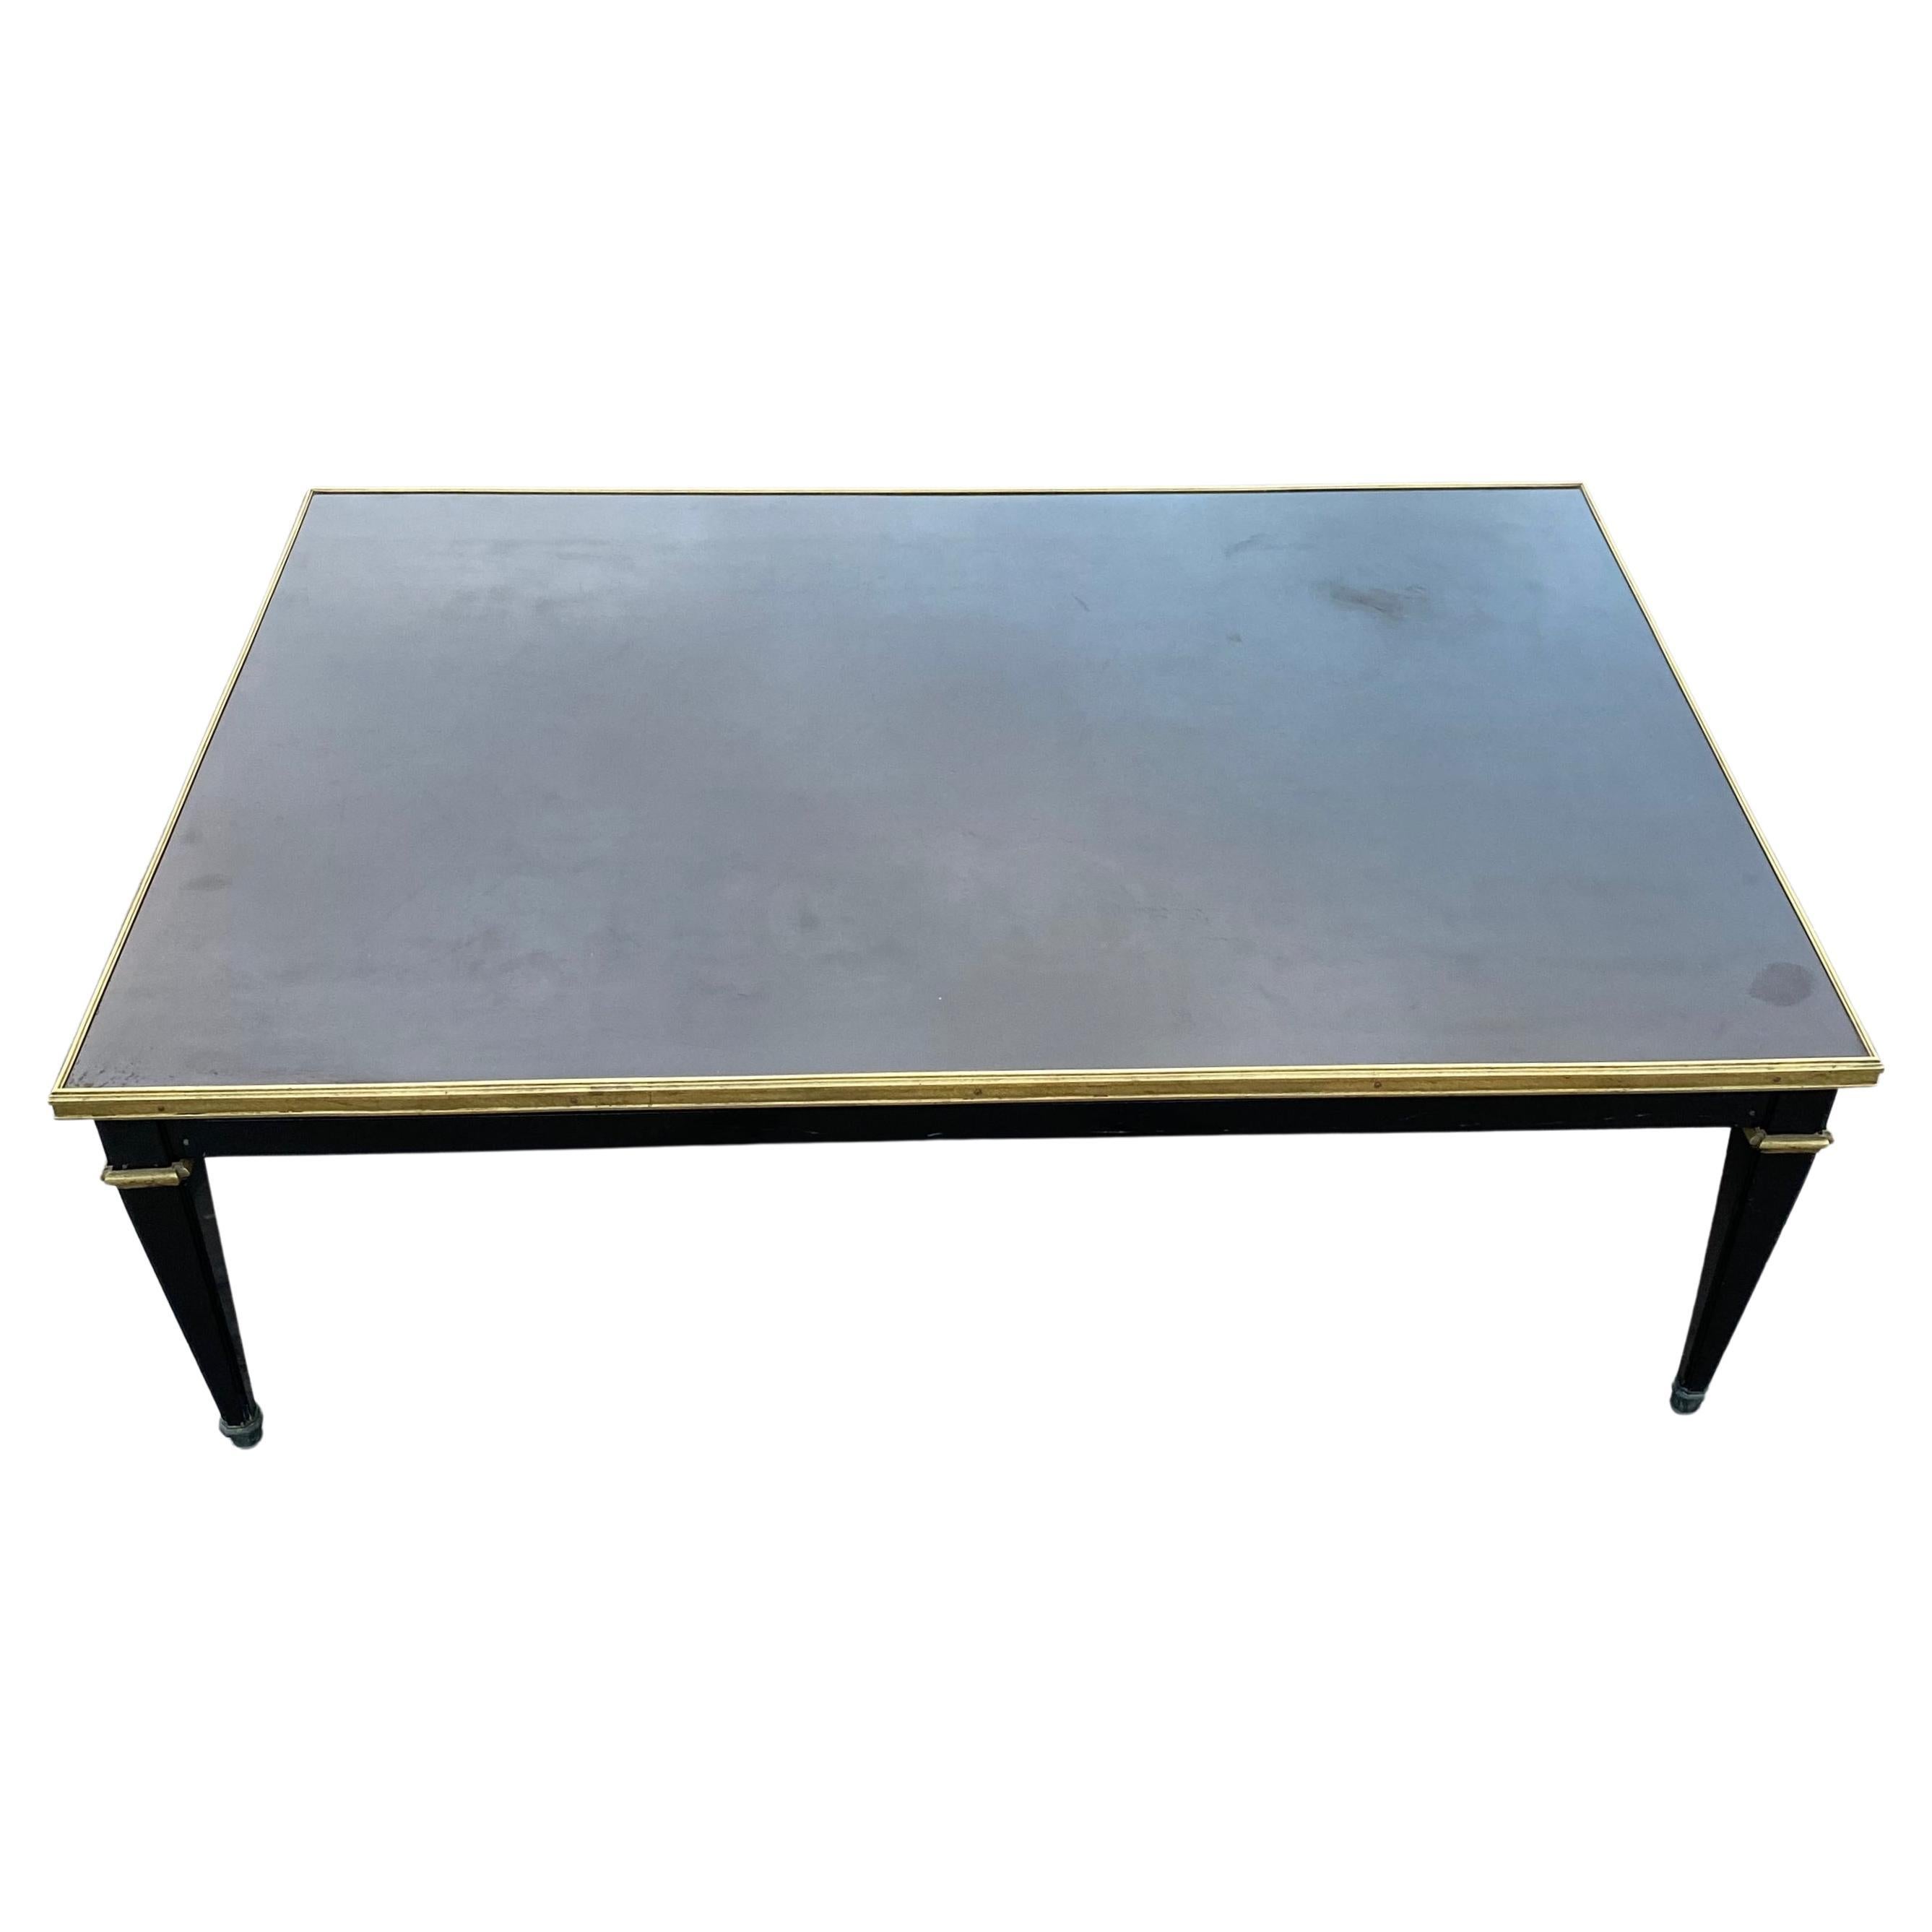 1950/70 Coffee Table Wood Lacquered Black Maison Jansen 120 x 80 cm Gerard MILLE